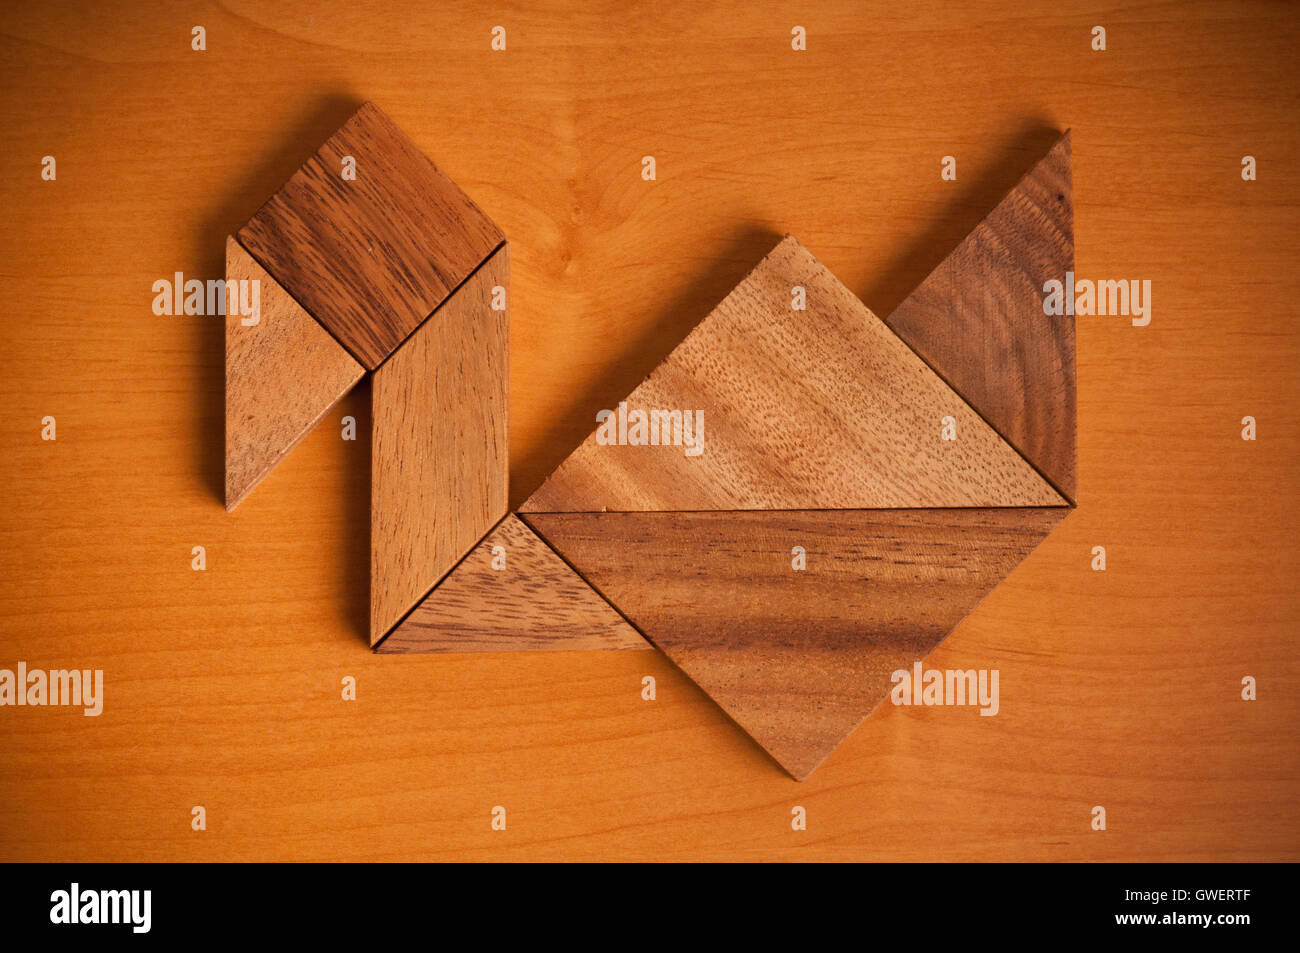 Tangram wooden figure Stock Photo